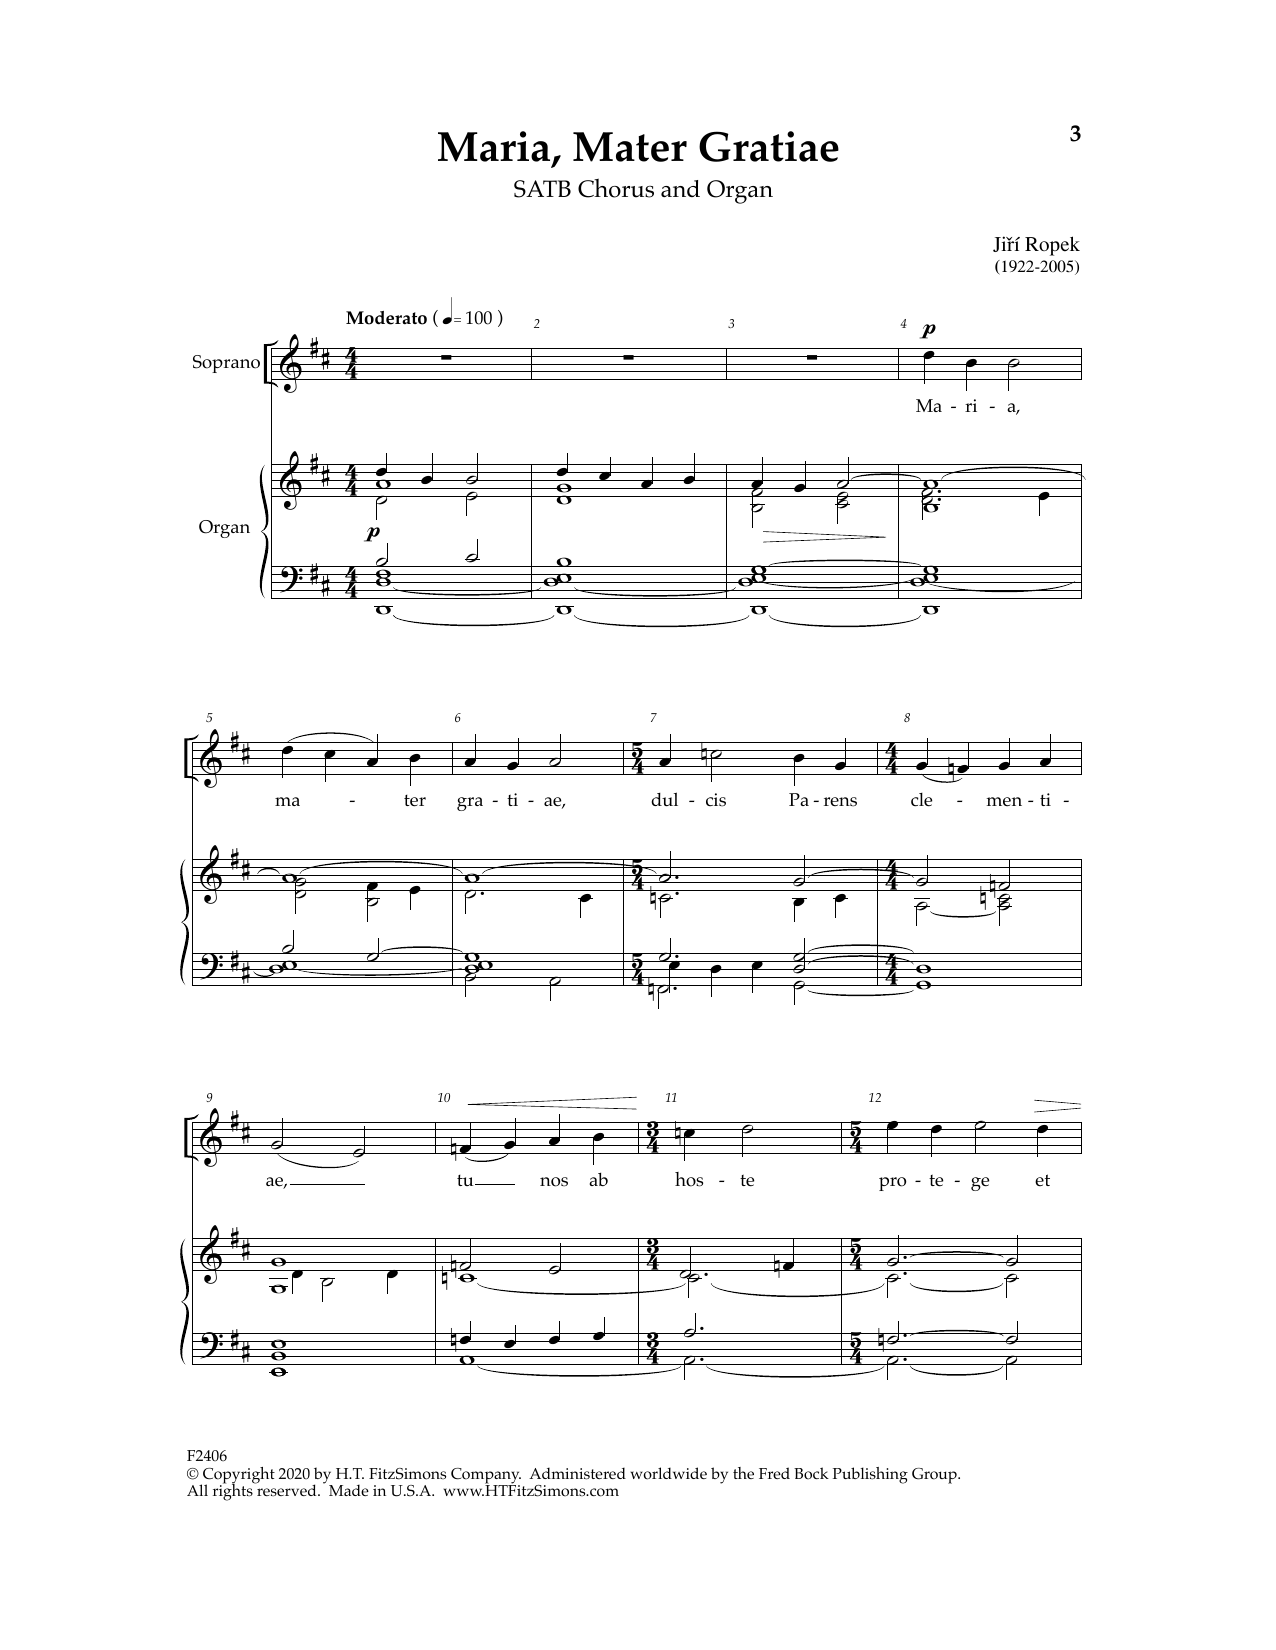 Jira Ropek Maria, Mater Gratiae Sheet Music Notes & Chords for SATB Choir - Download or Print PDF